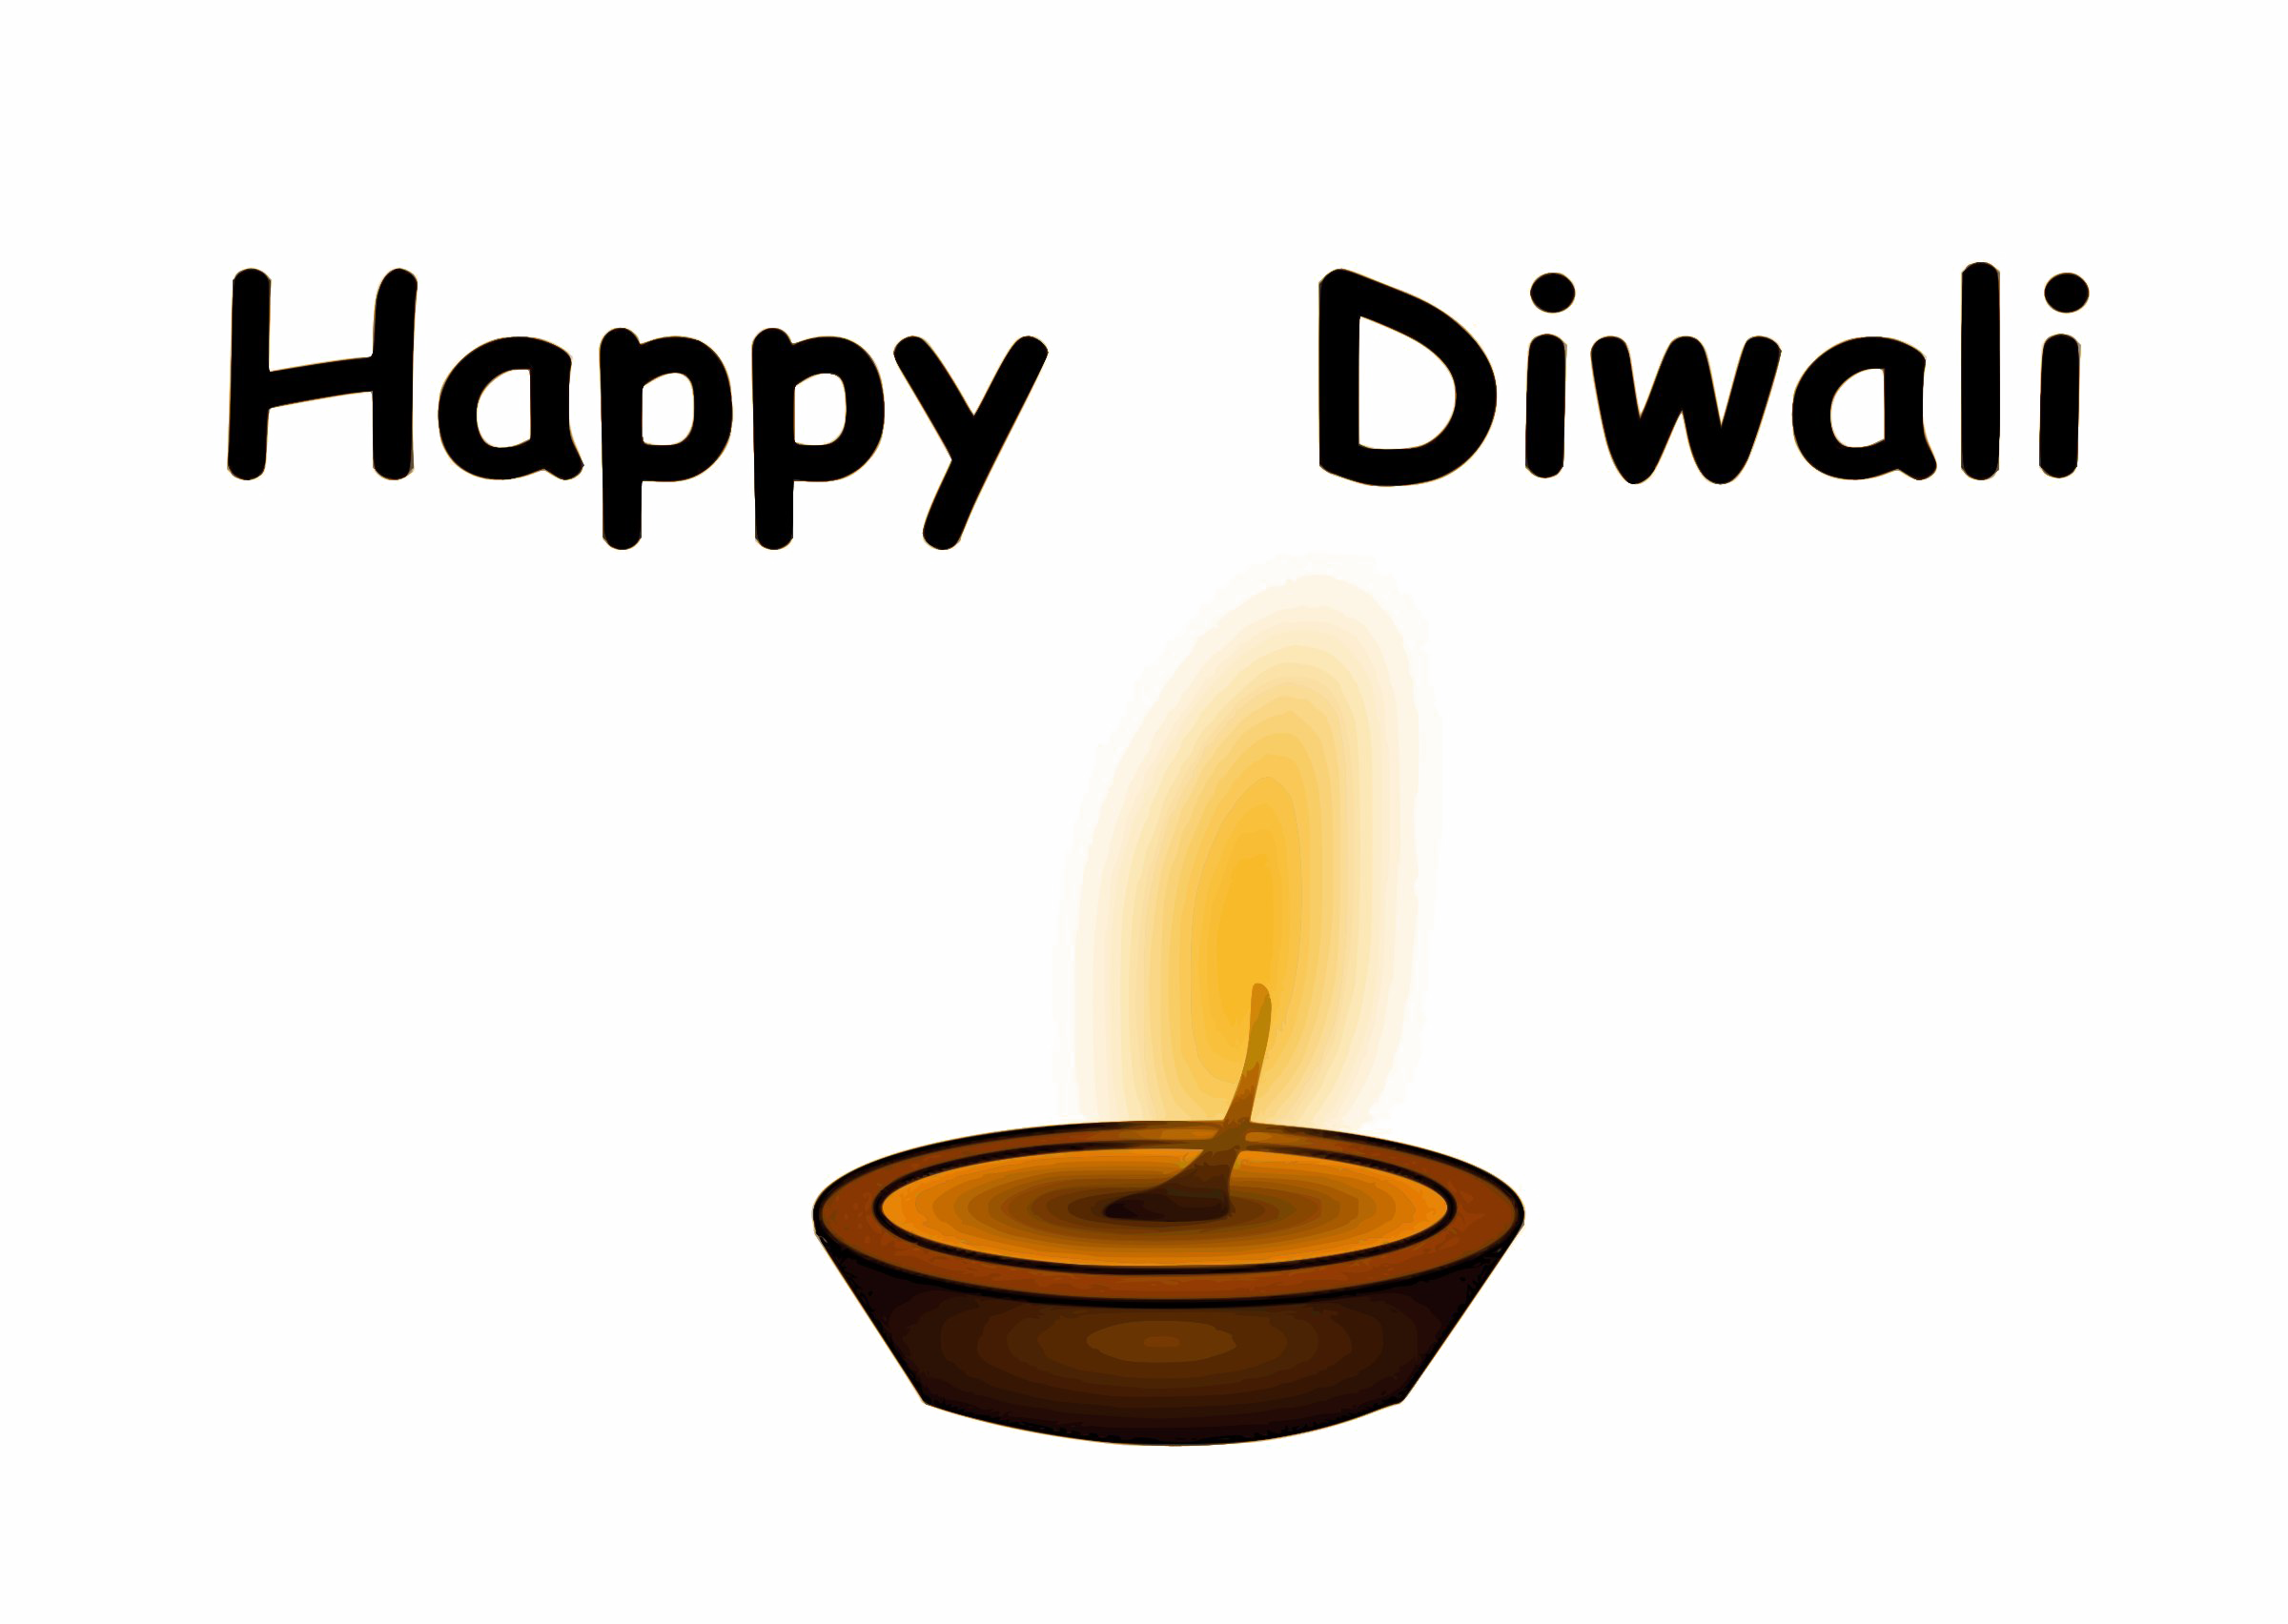 Happy Diwali PNG Image